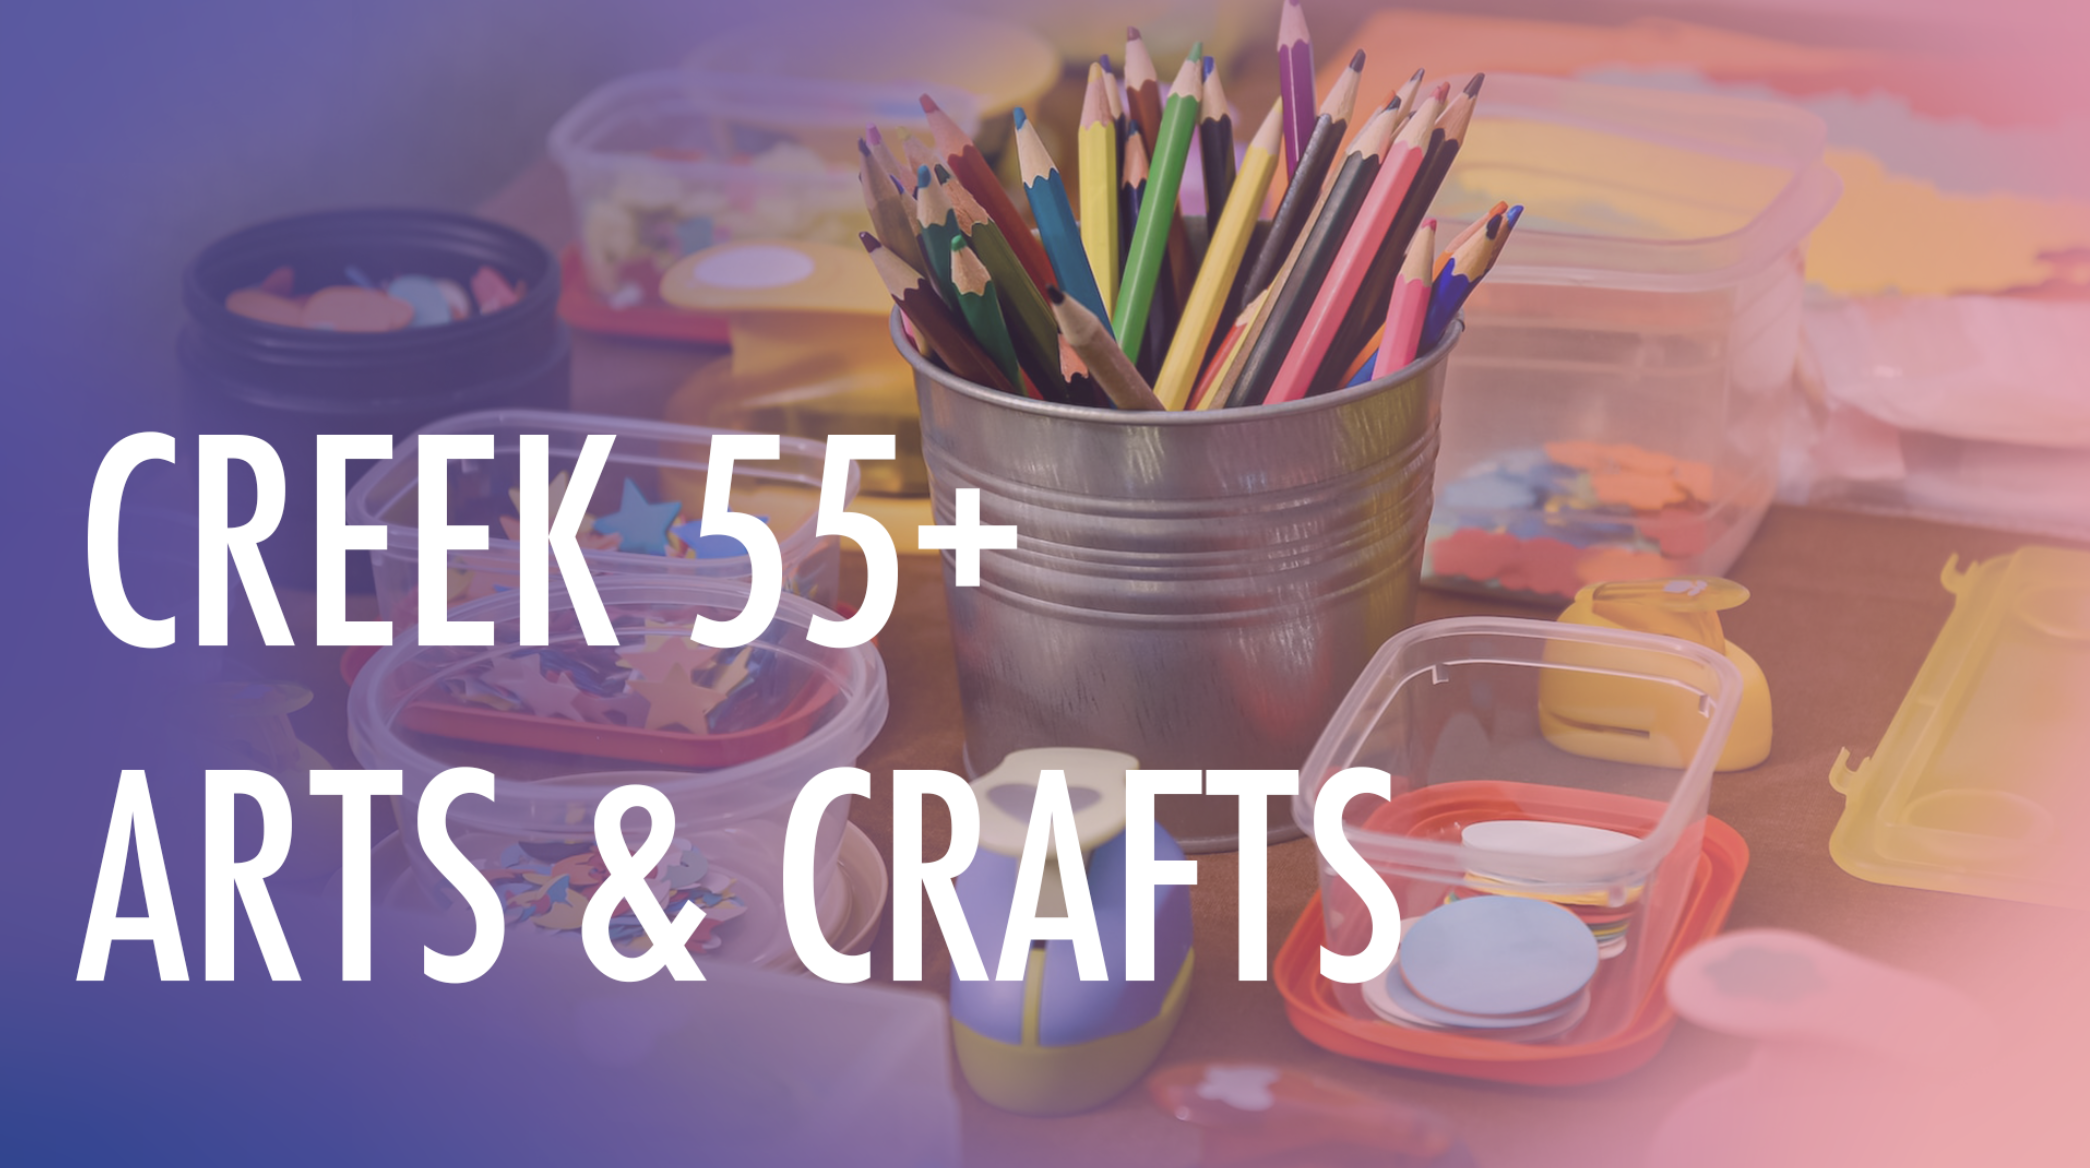 Cottonwood Creek Church - Creek 55+ Arts & Crafts July